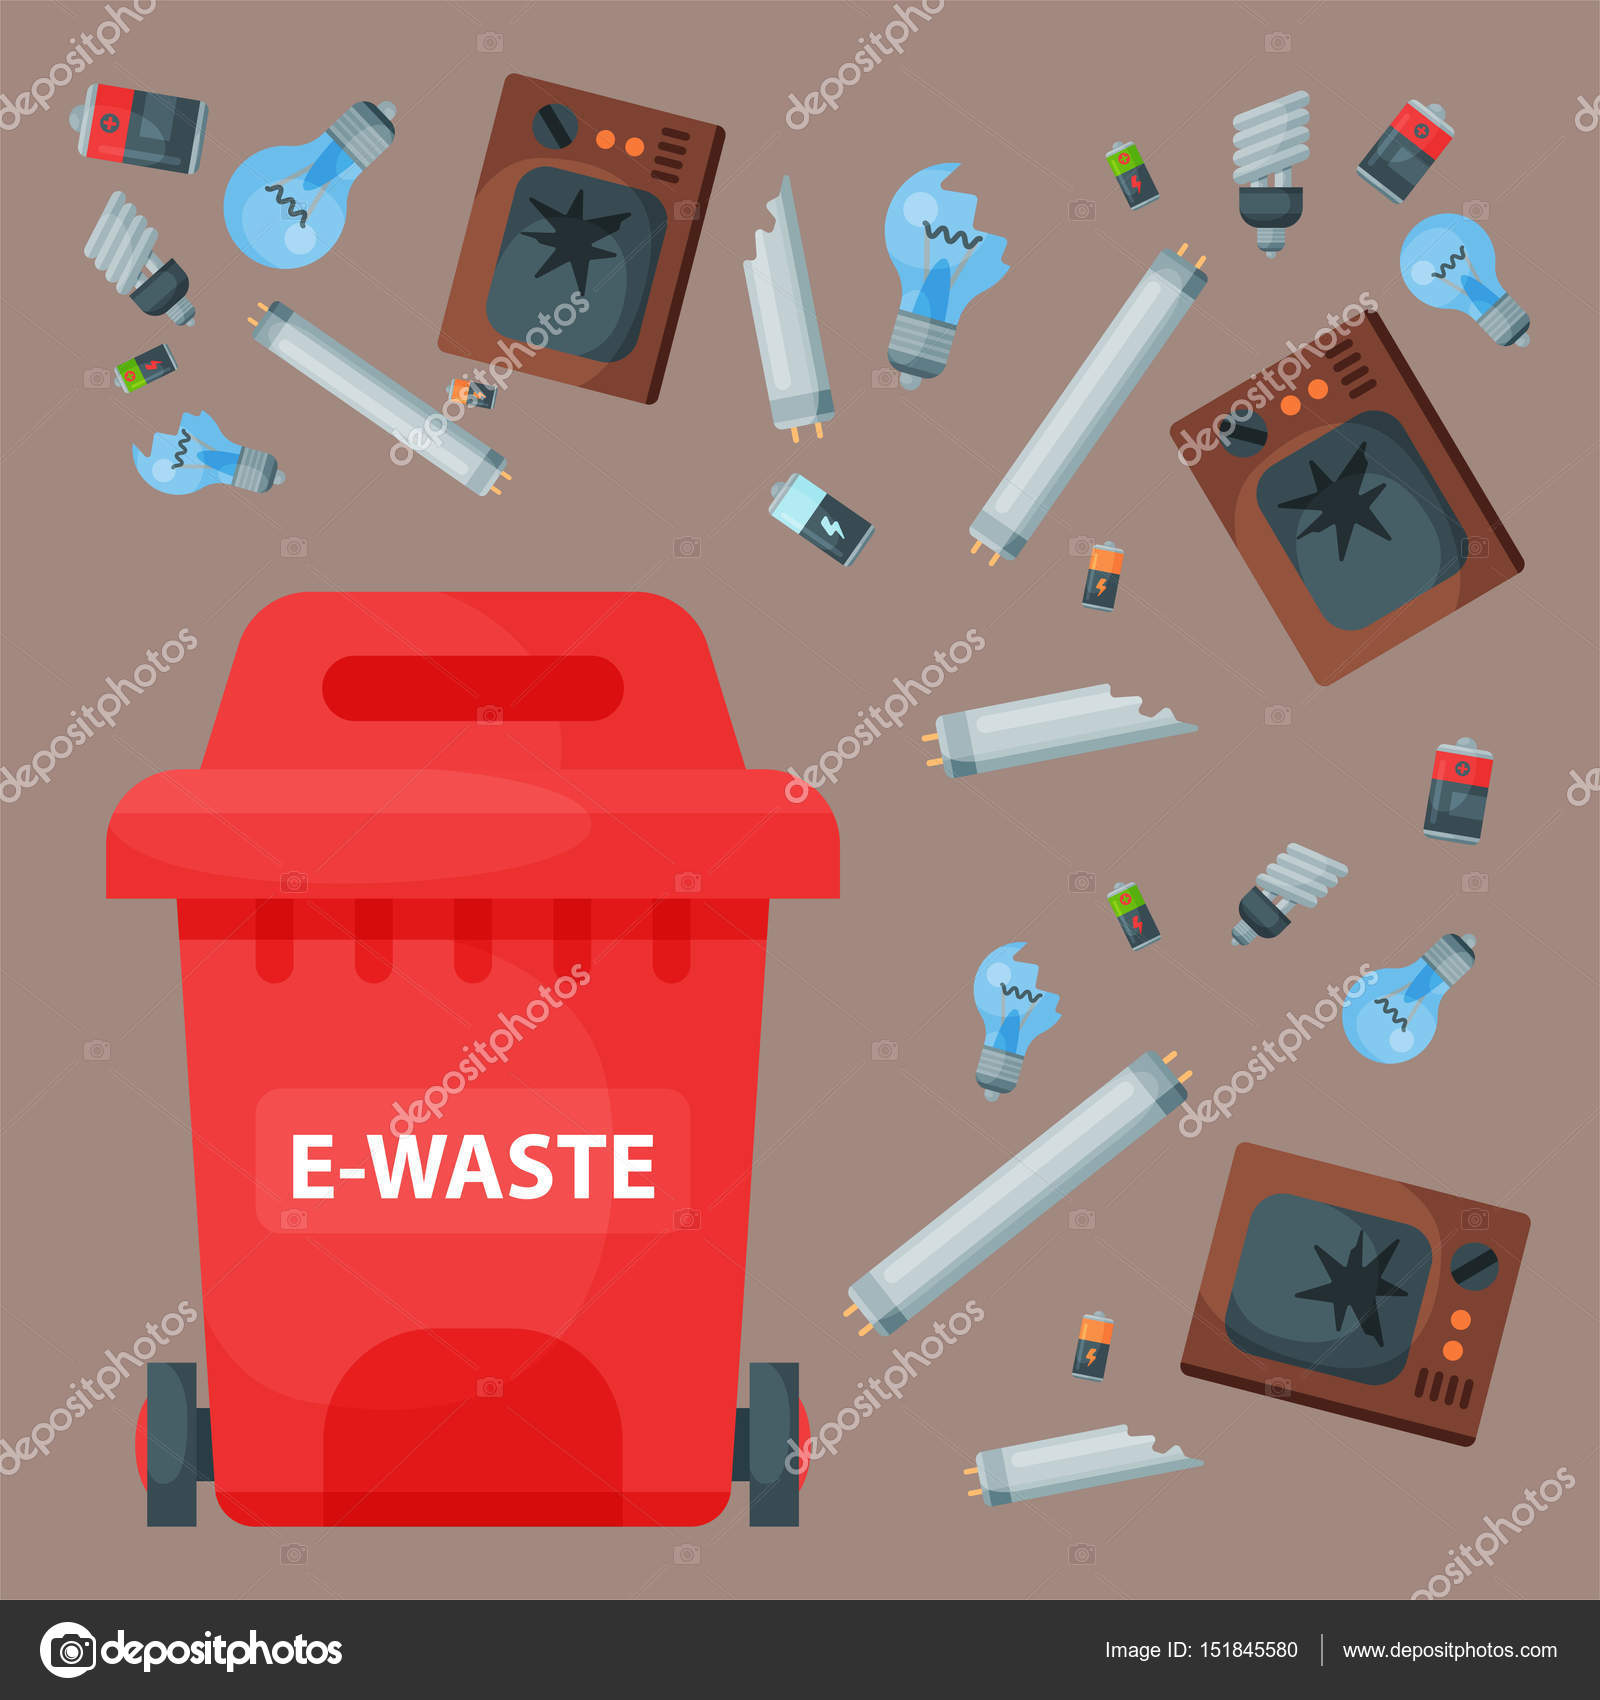 https://st3.depositphotos.com/10665628/15184/v/1600/depositphotos_151845580-stock-illustration-recycling-garbage-elements-trash-bags.jpg